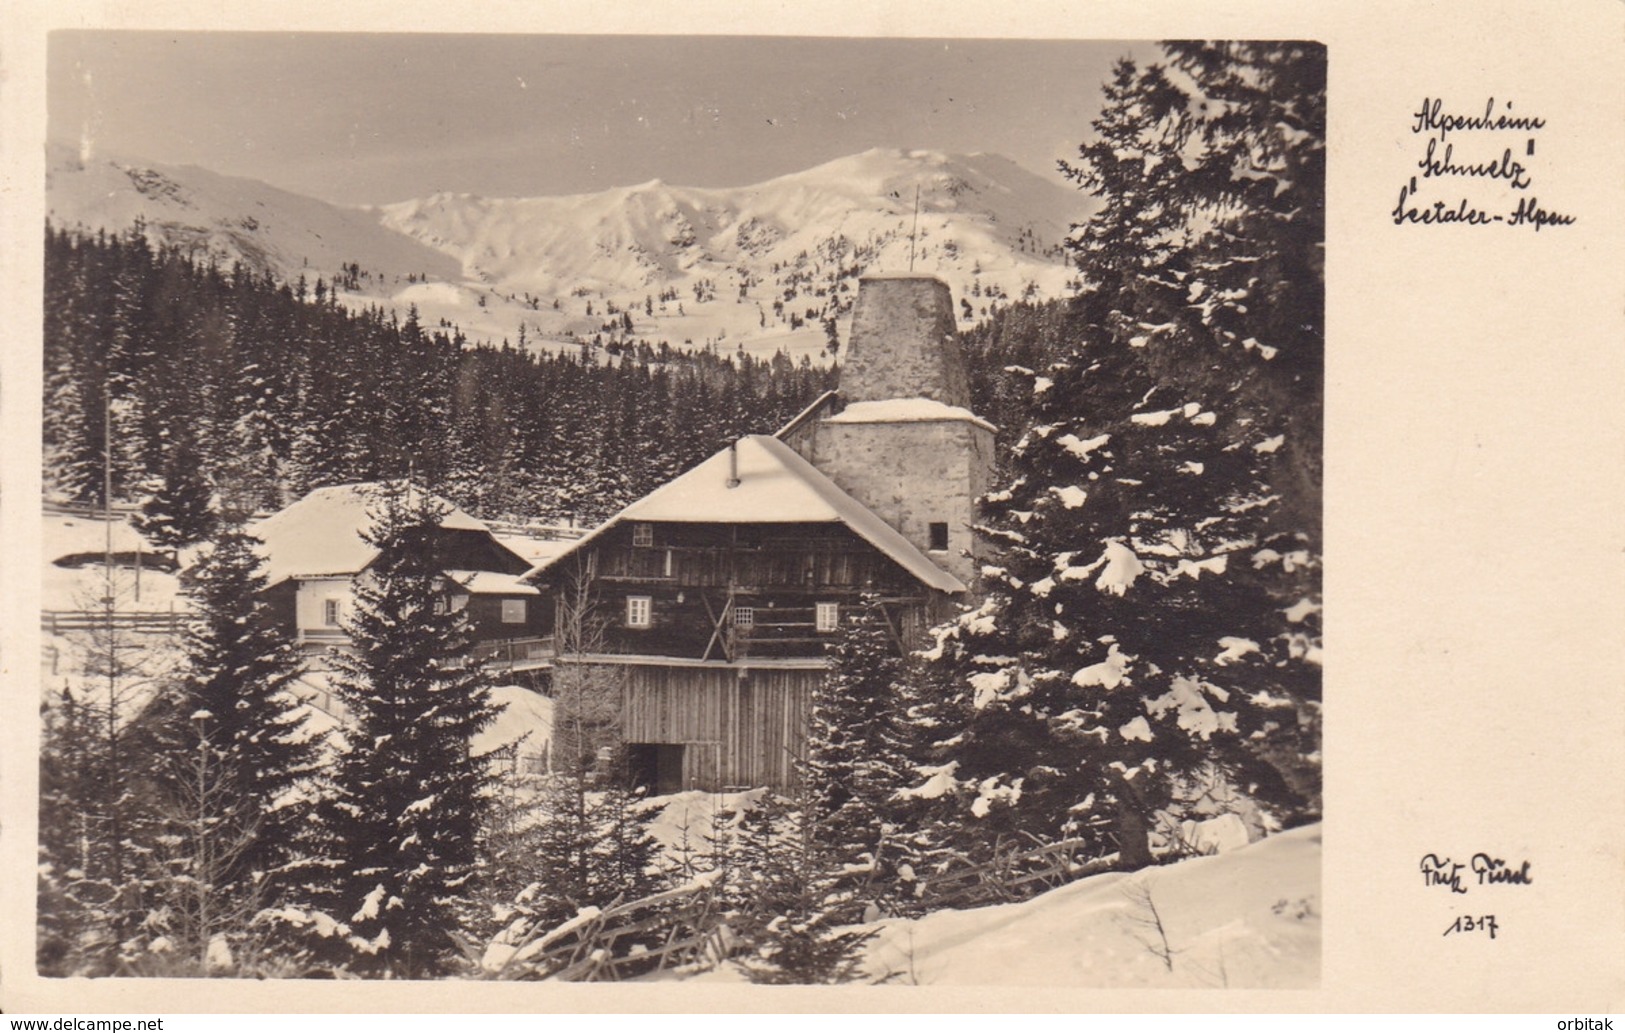 Alpenheim Schmelz * Berghütte, Winter, Gebirge, Tirol, Seetaler Alpen * Österreich * AK2162 - Judenburg